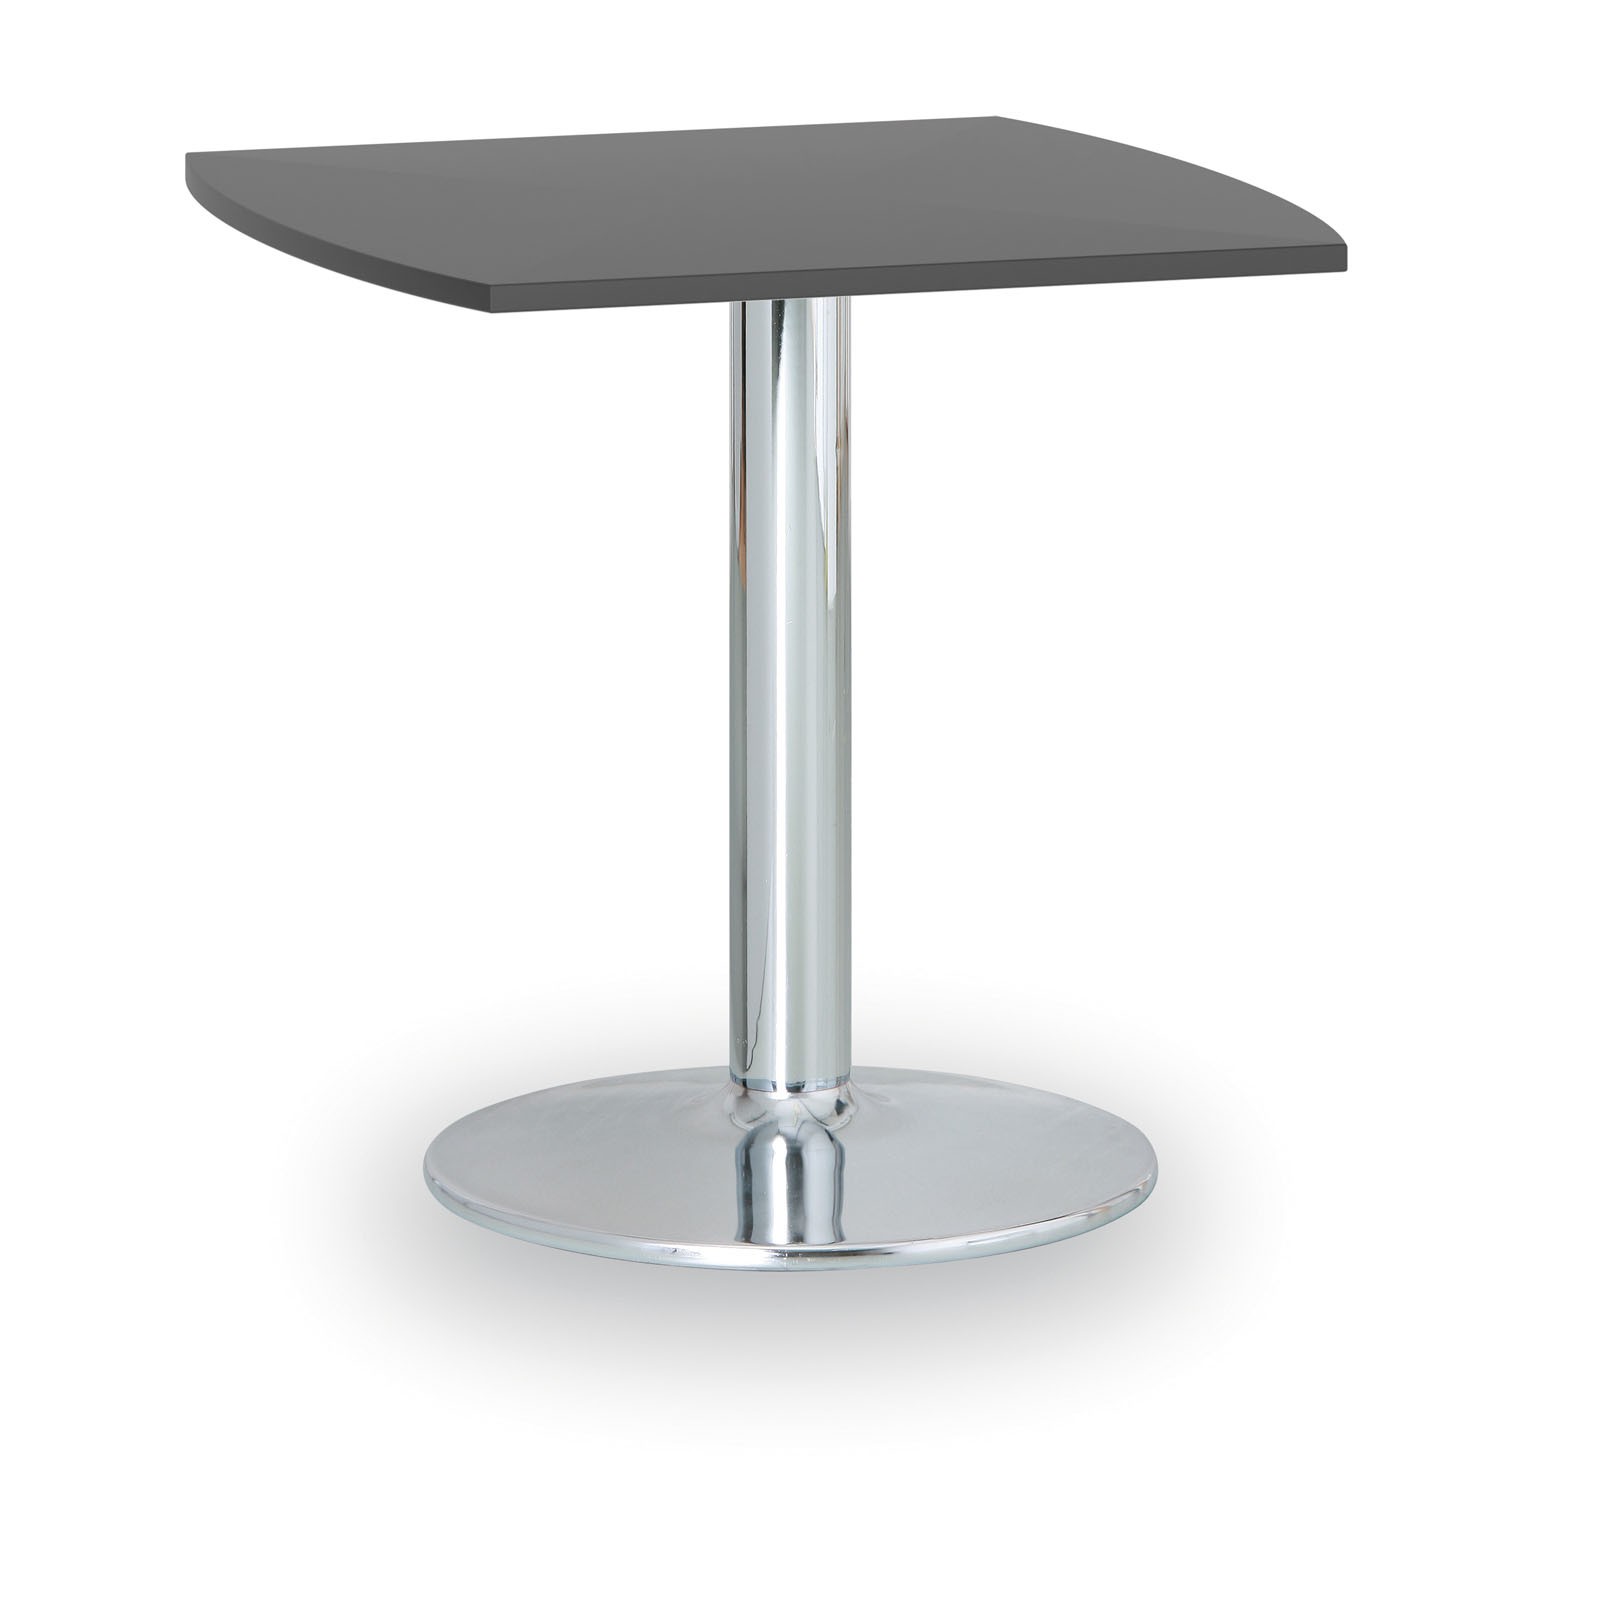 Konferenčný stolík ZEUS II, 660x660 mm, chrómovaná podnož, doska grafit